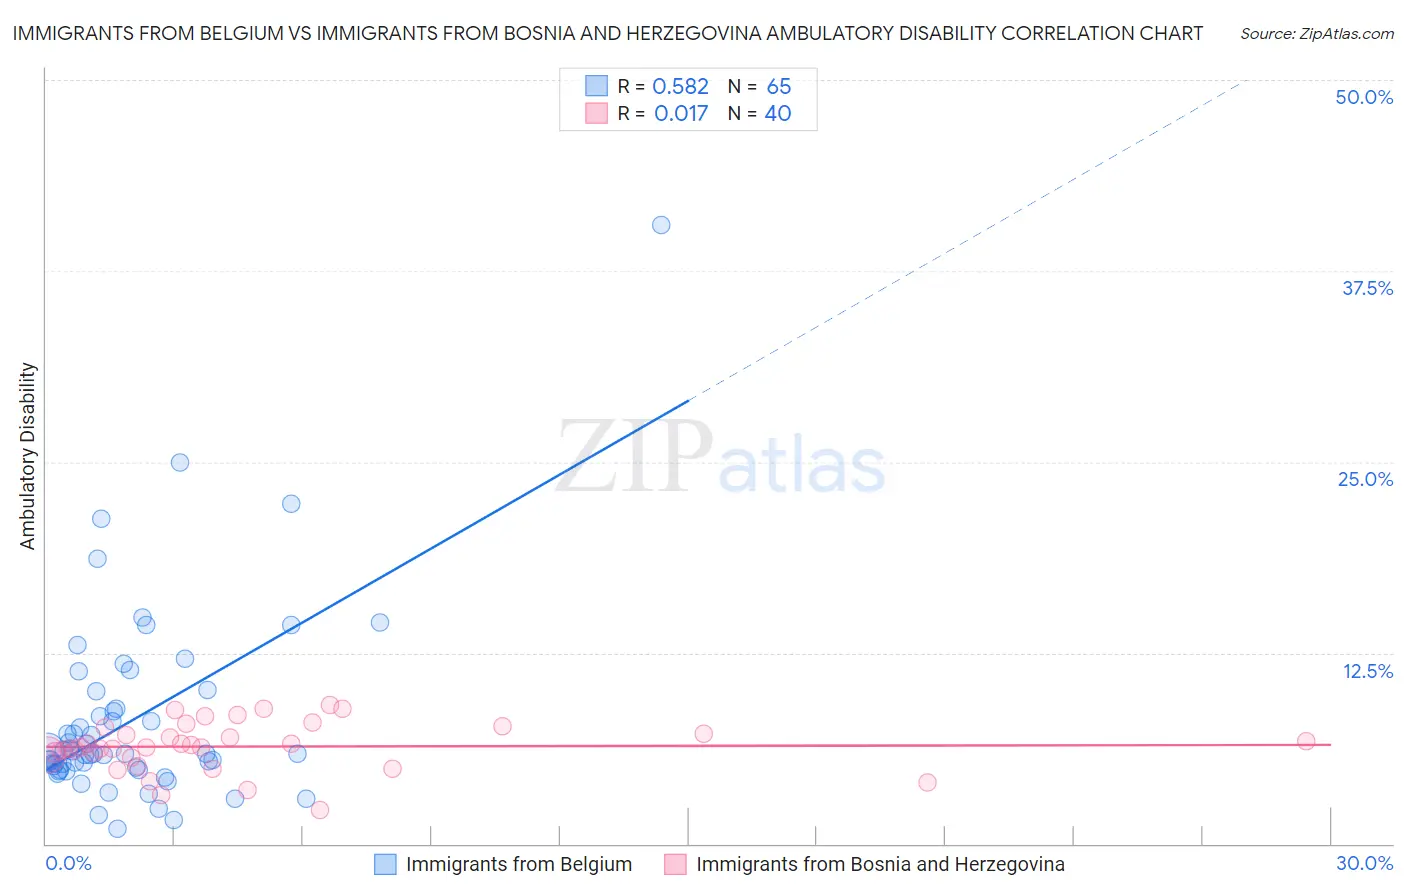 Immigrants from Belgium vs Immigrants from Bosnia and Herzegovina Ambulatory Disability